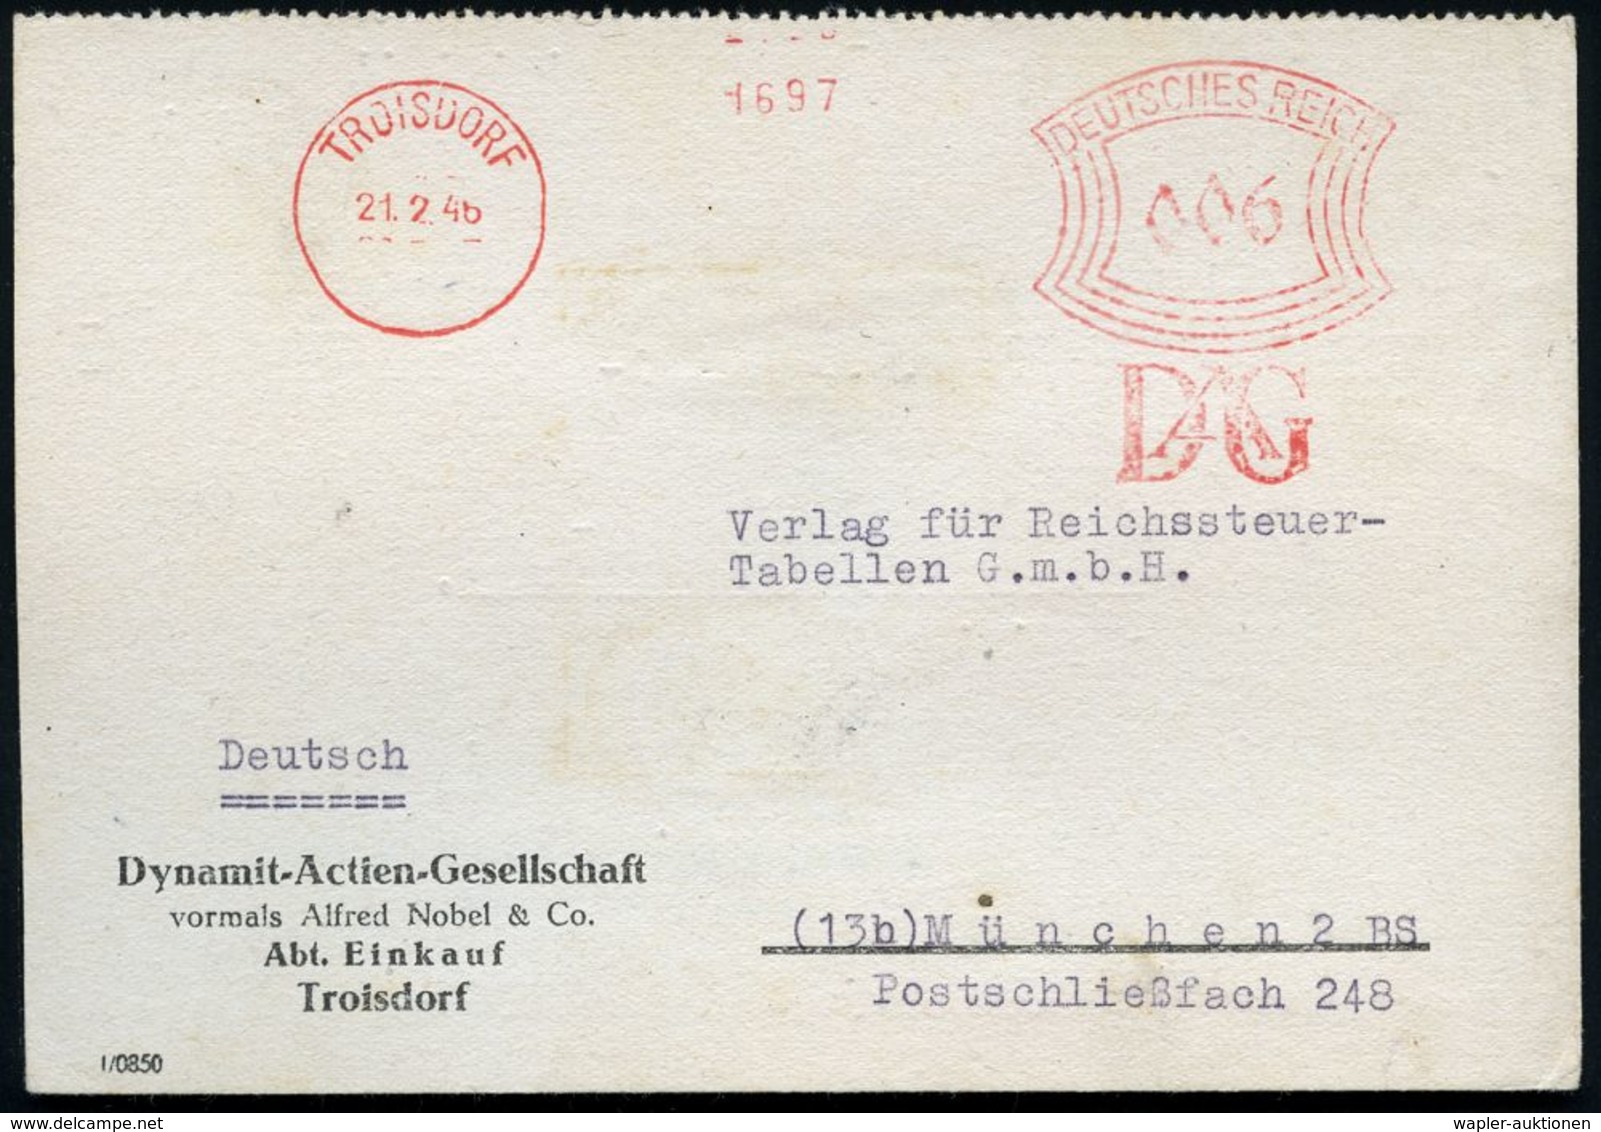 NOBELPREIS / NOBELPREISTRÄGER : TROISDORF/ DAG 1946 (21.2.) Seltener, Unverändert Weiterverwendeter AFS "Bogenrechteck"  - Prix Nobel